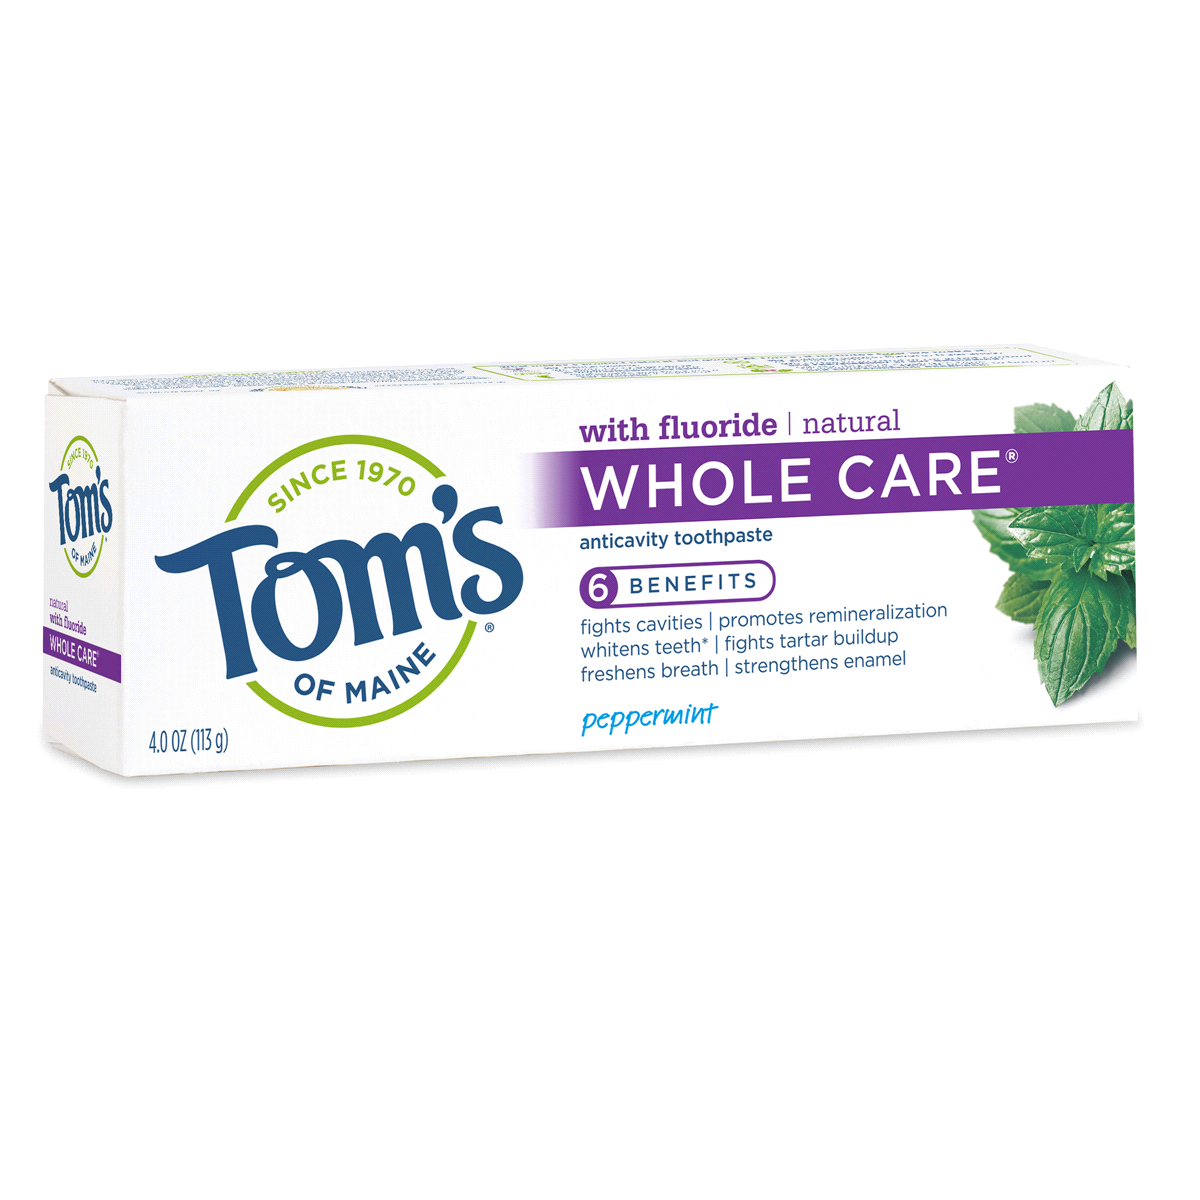 Tom's of Maine toothpaste